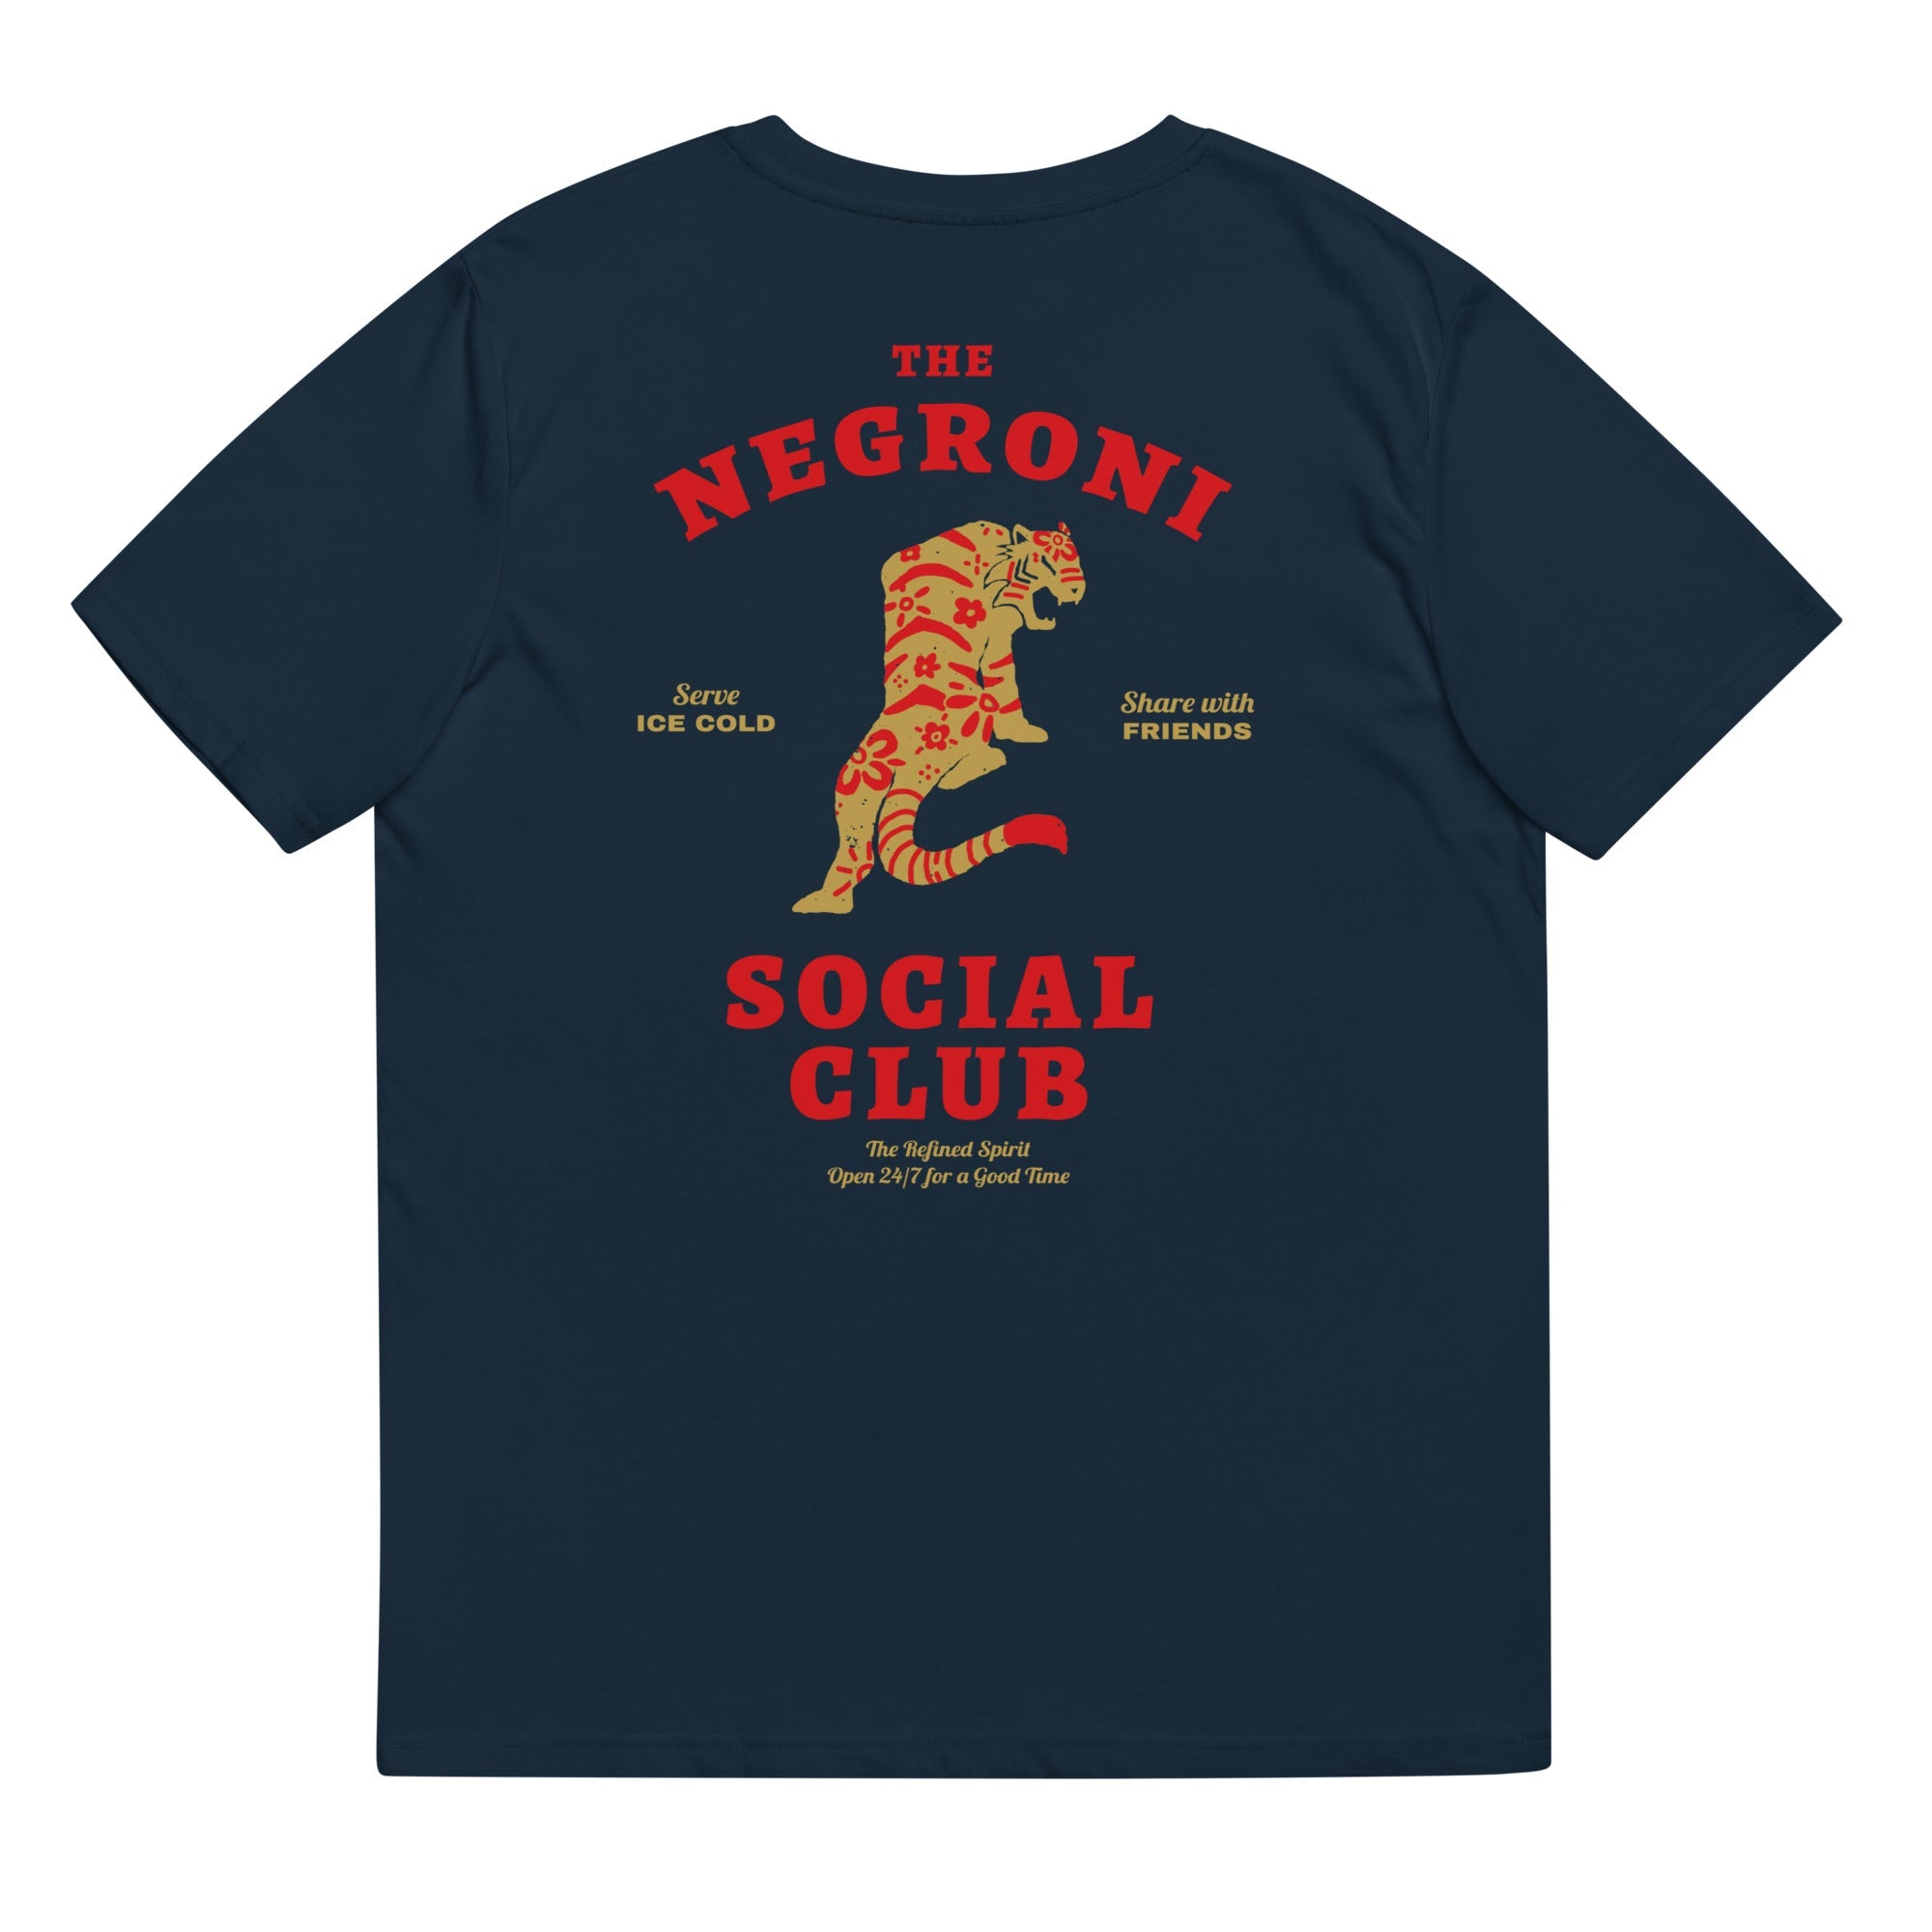 The Negroni Social Club - Unisex Organic T-shirt - The Refined Spirit